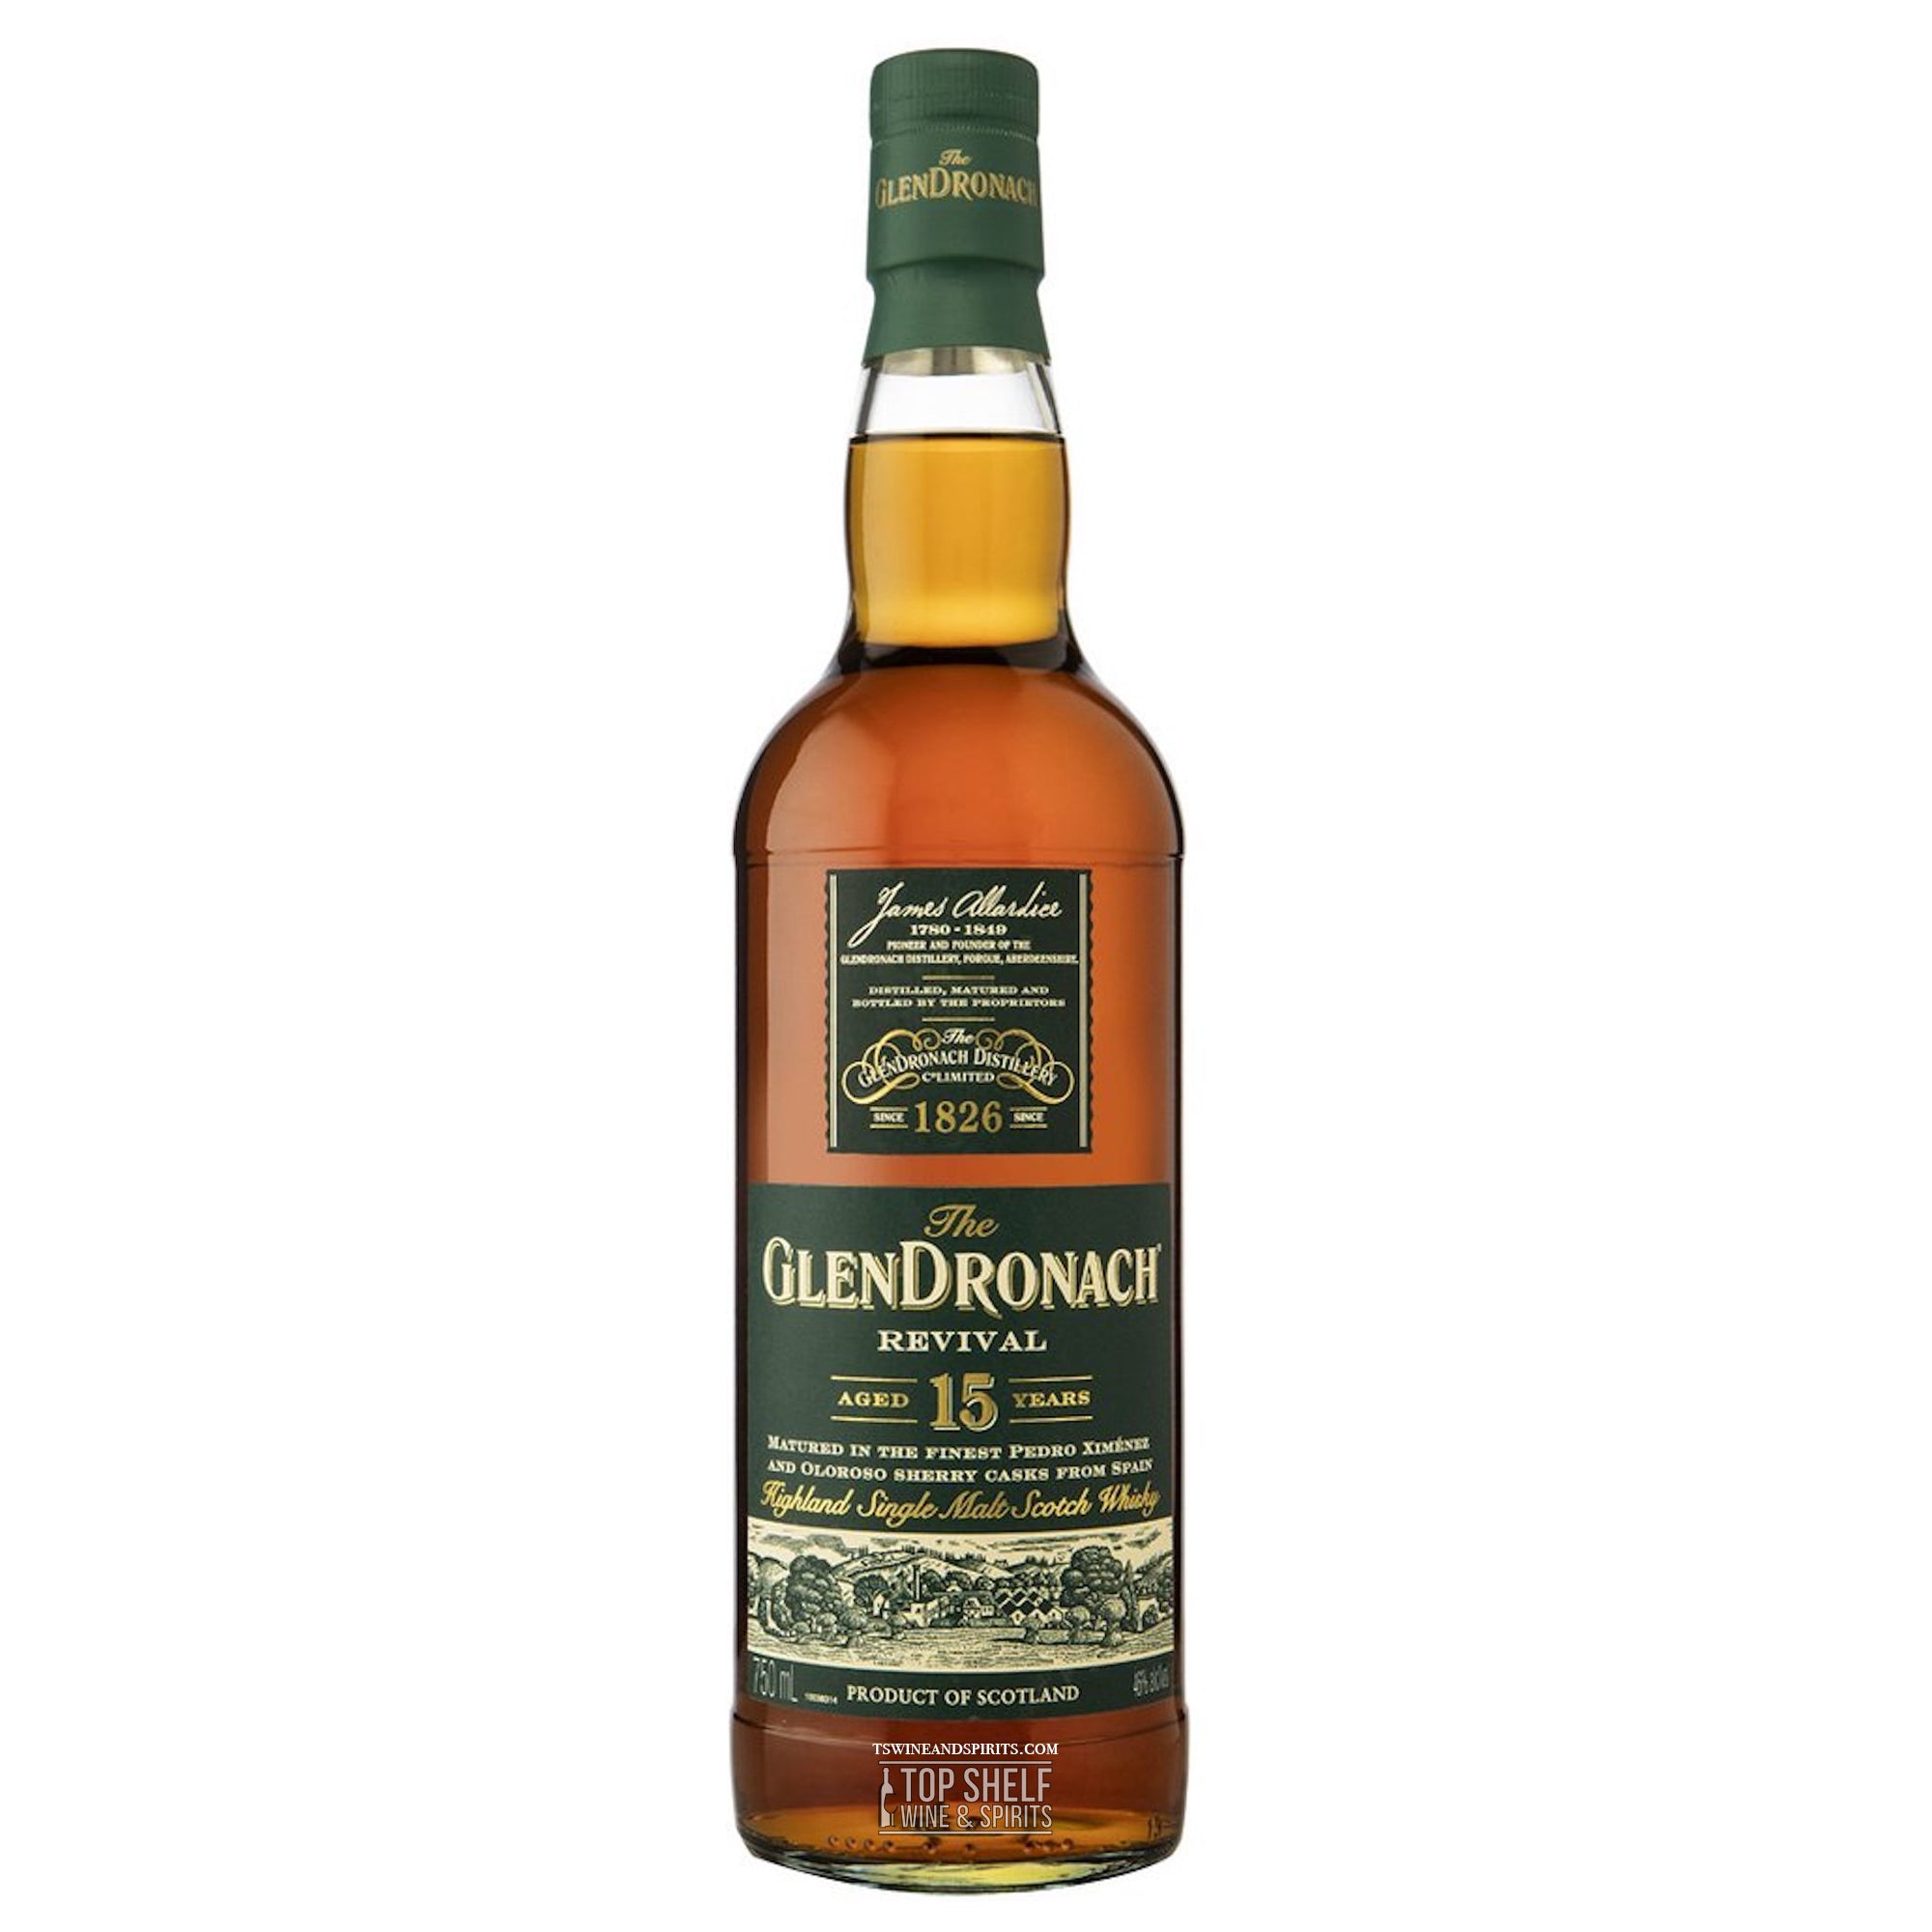 The Glendronach Revival 15 Year Scotch